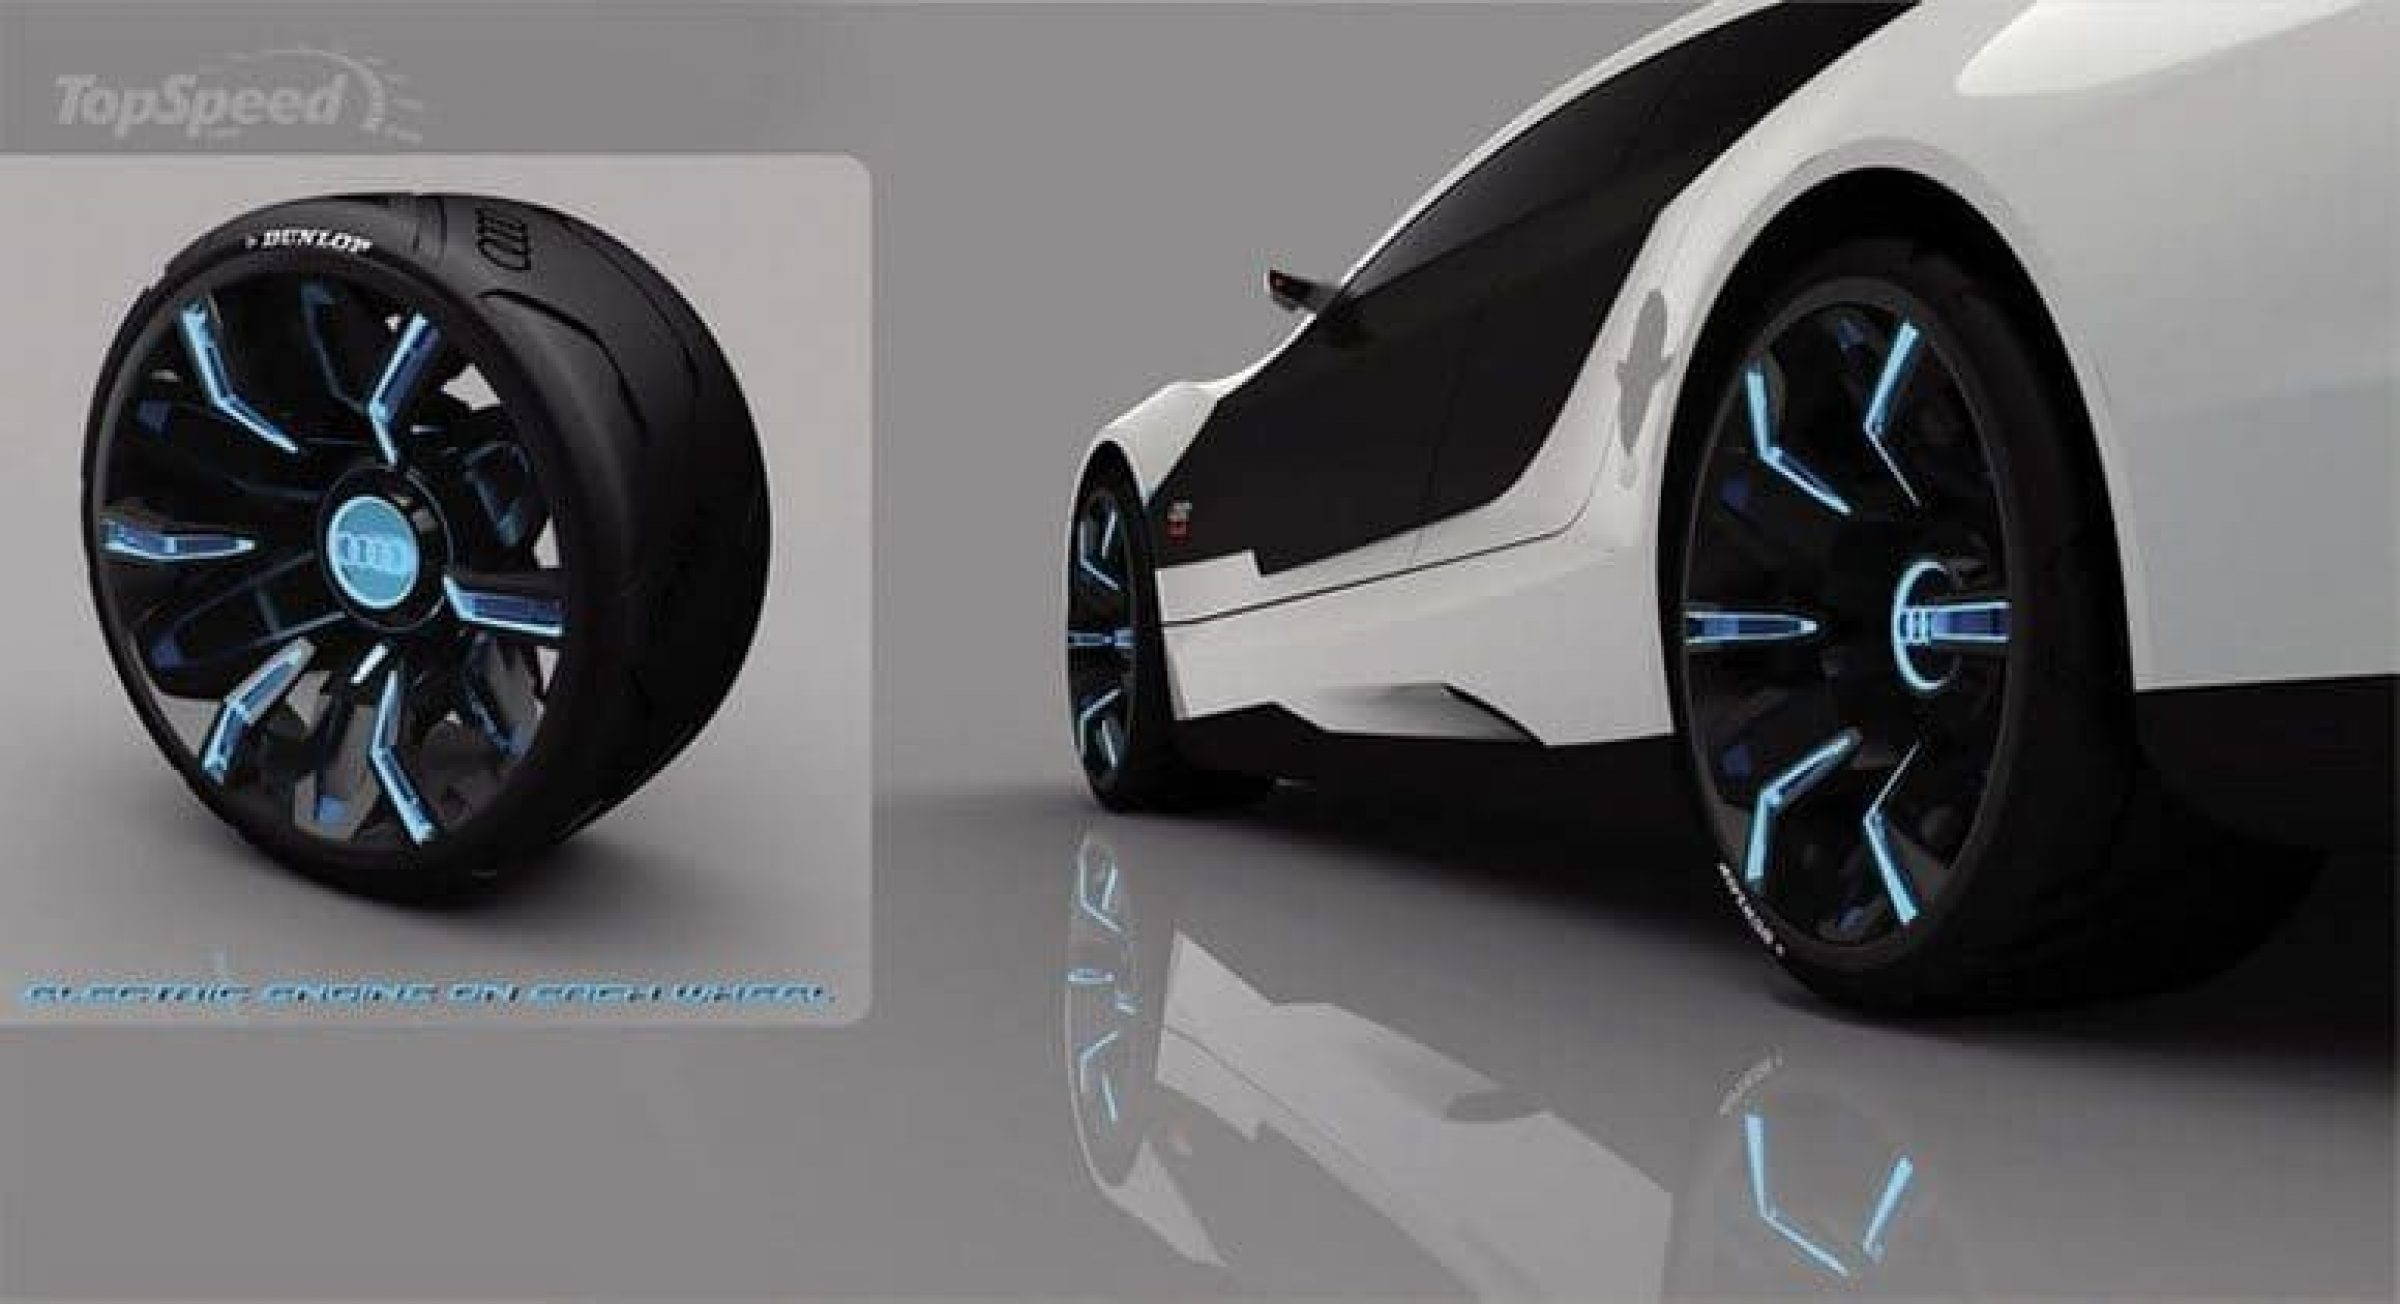 Audi Concept Daniel Garcia Arch2o Com